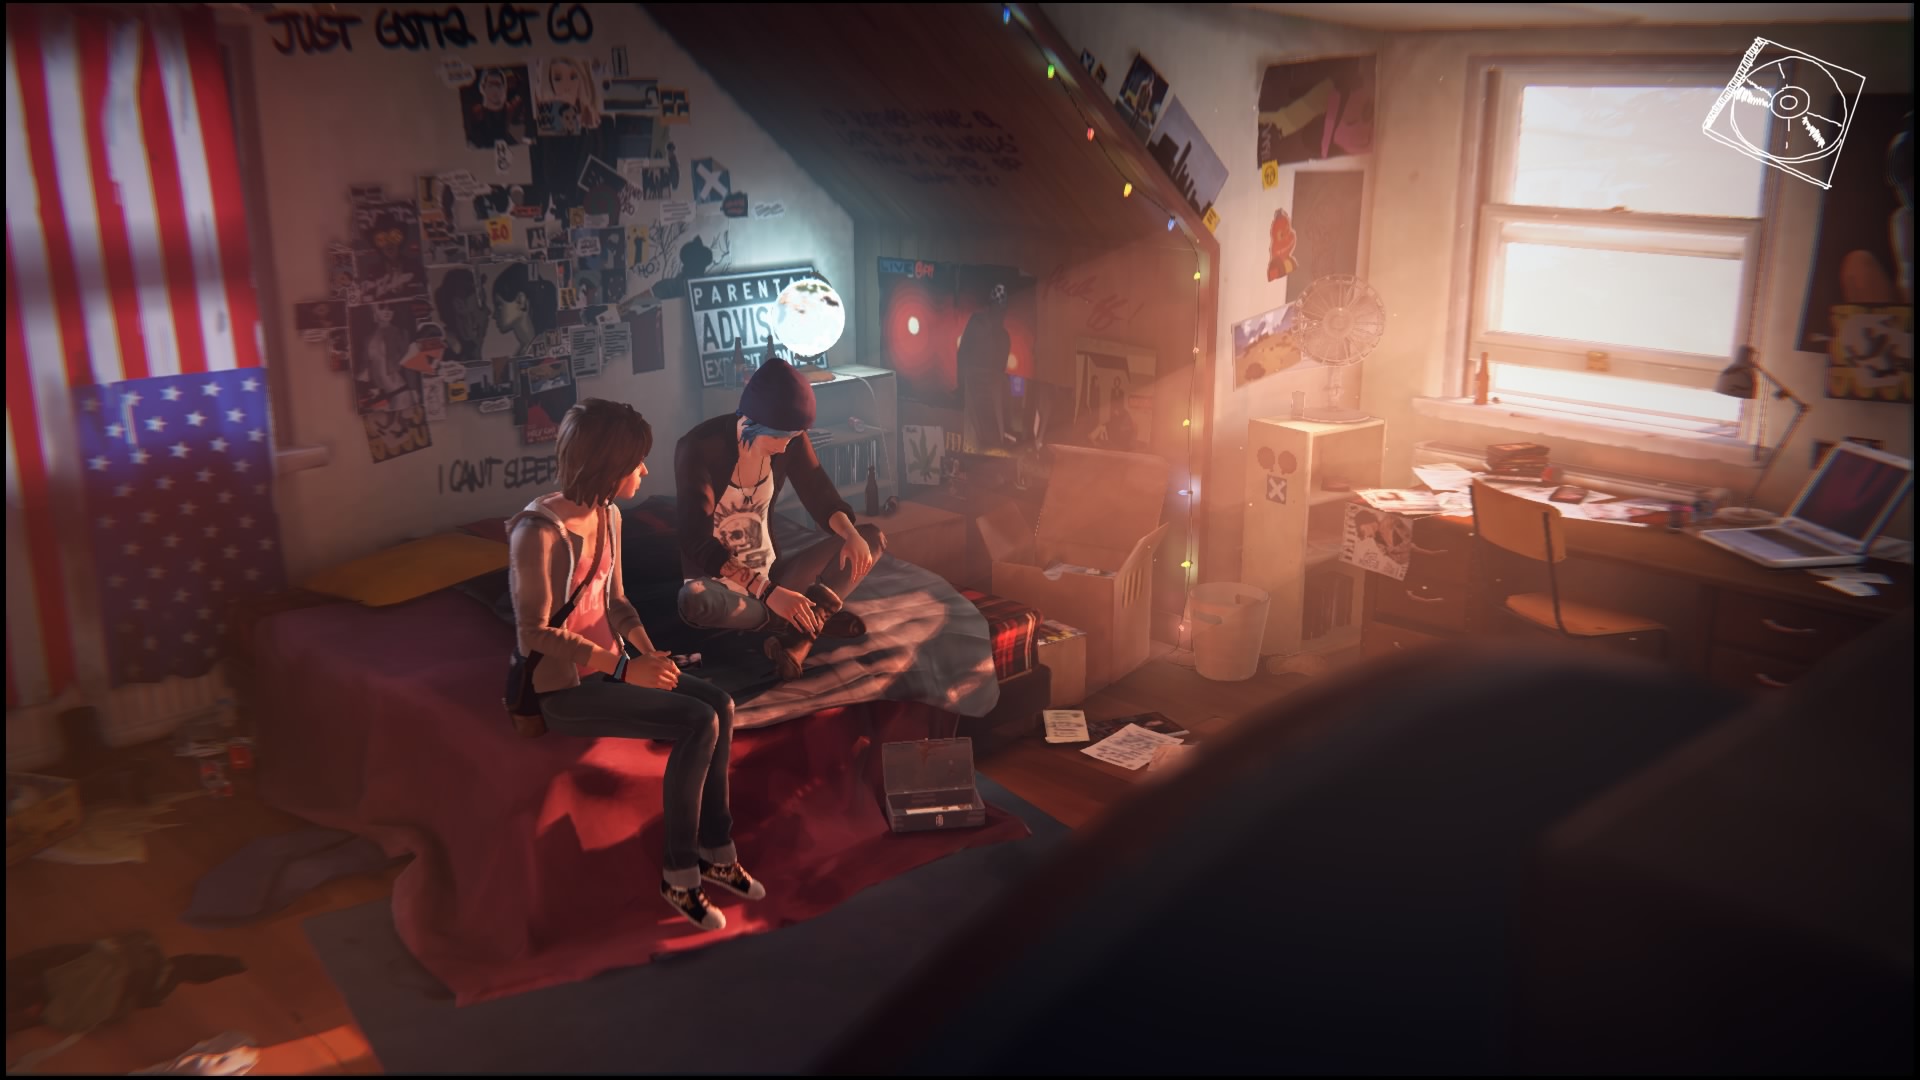 Imagem promocional do jogo "Life is Strange"